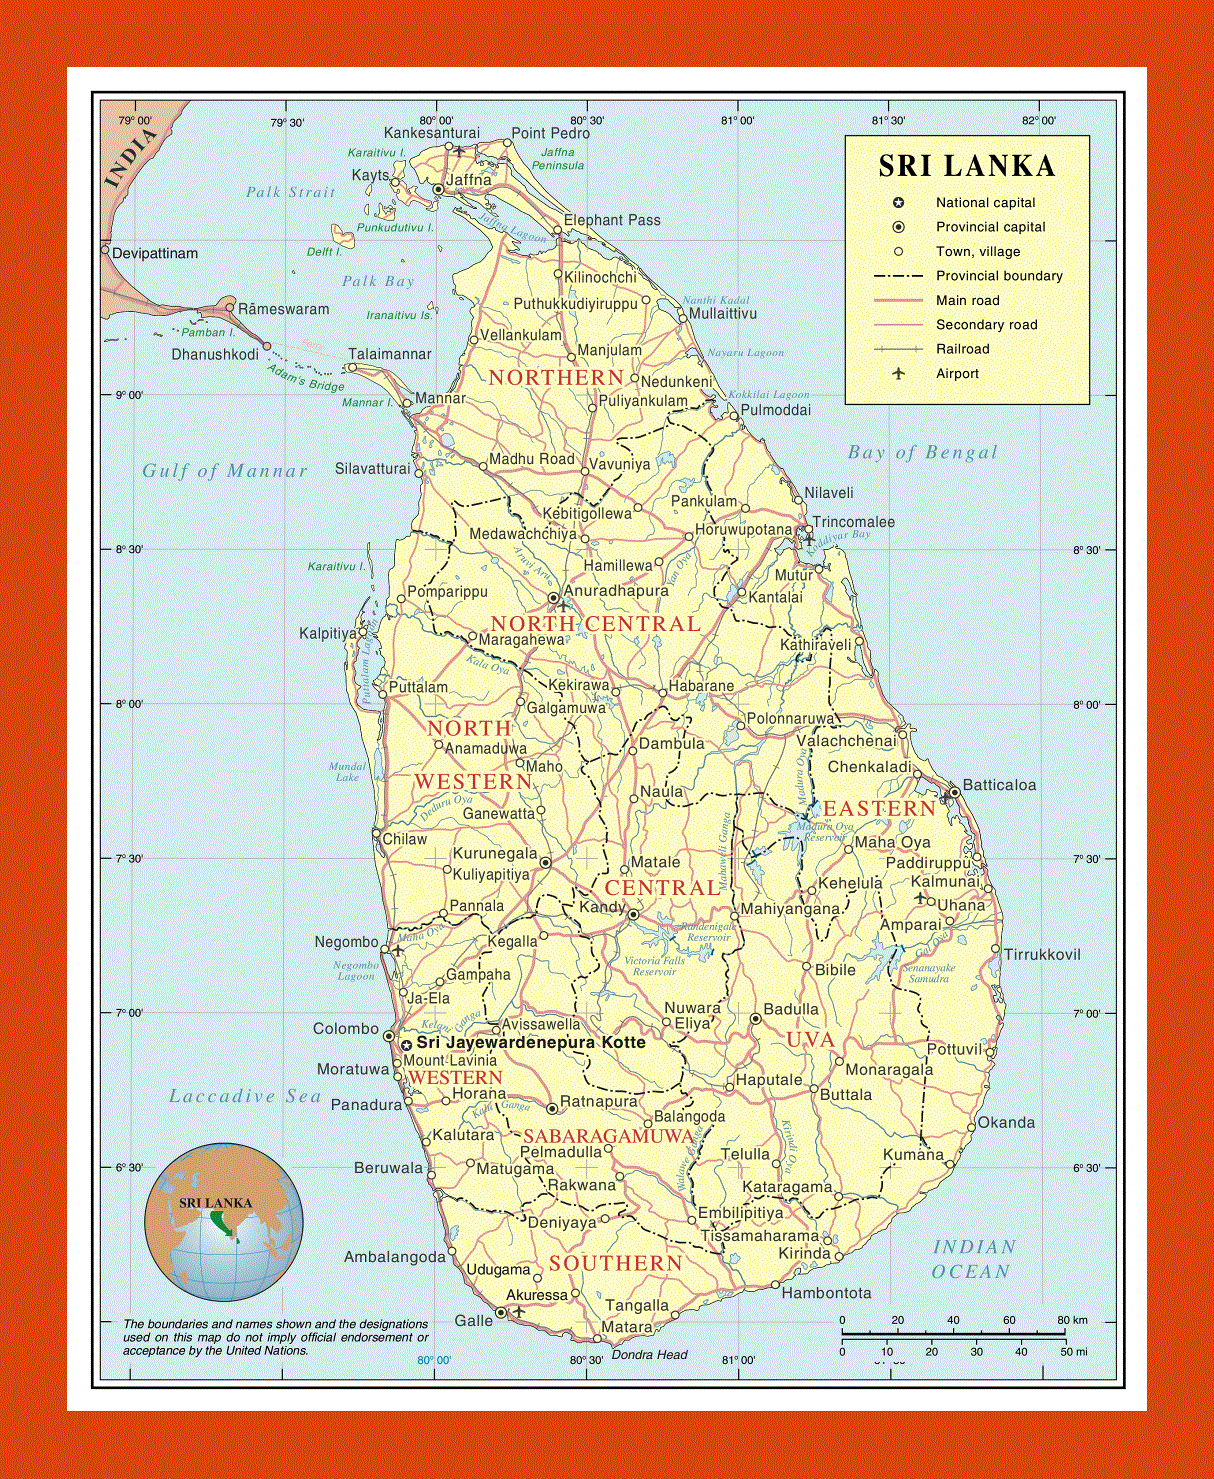 Political and administrative map of Sri Lanka